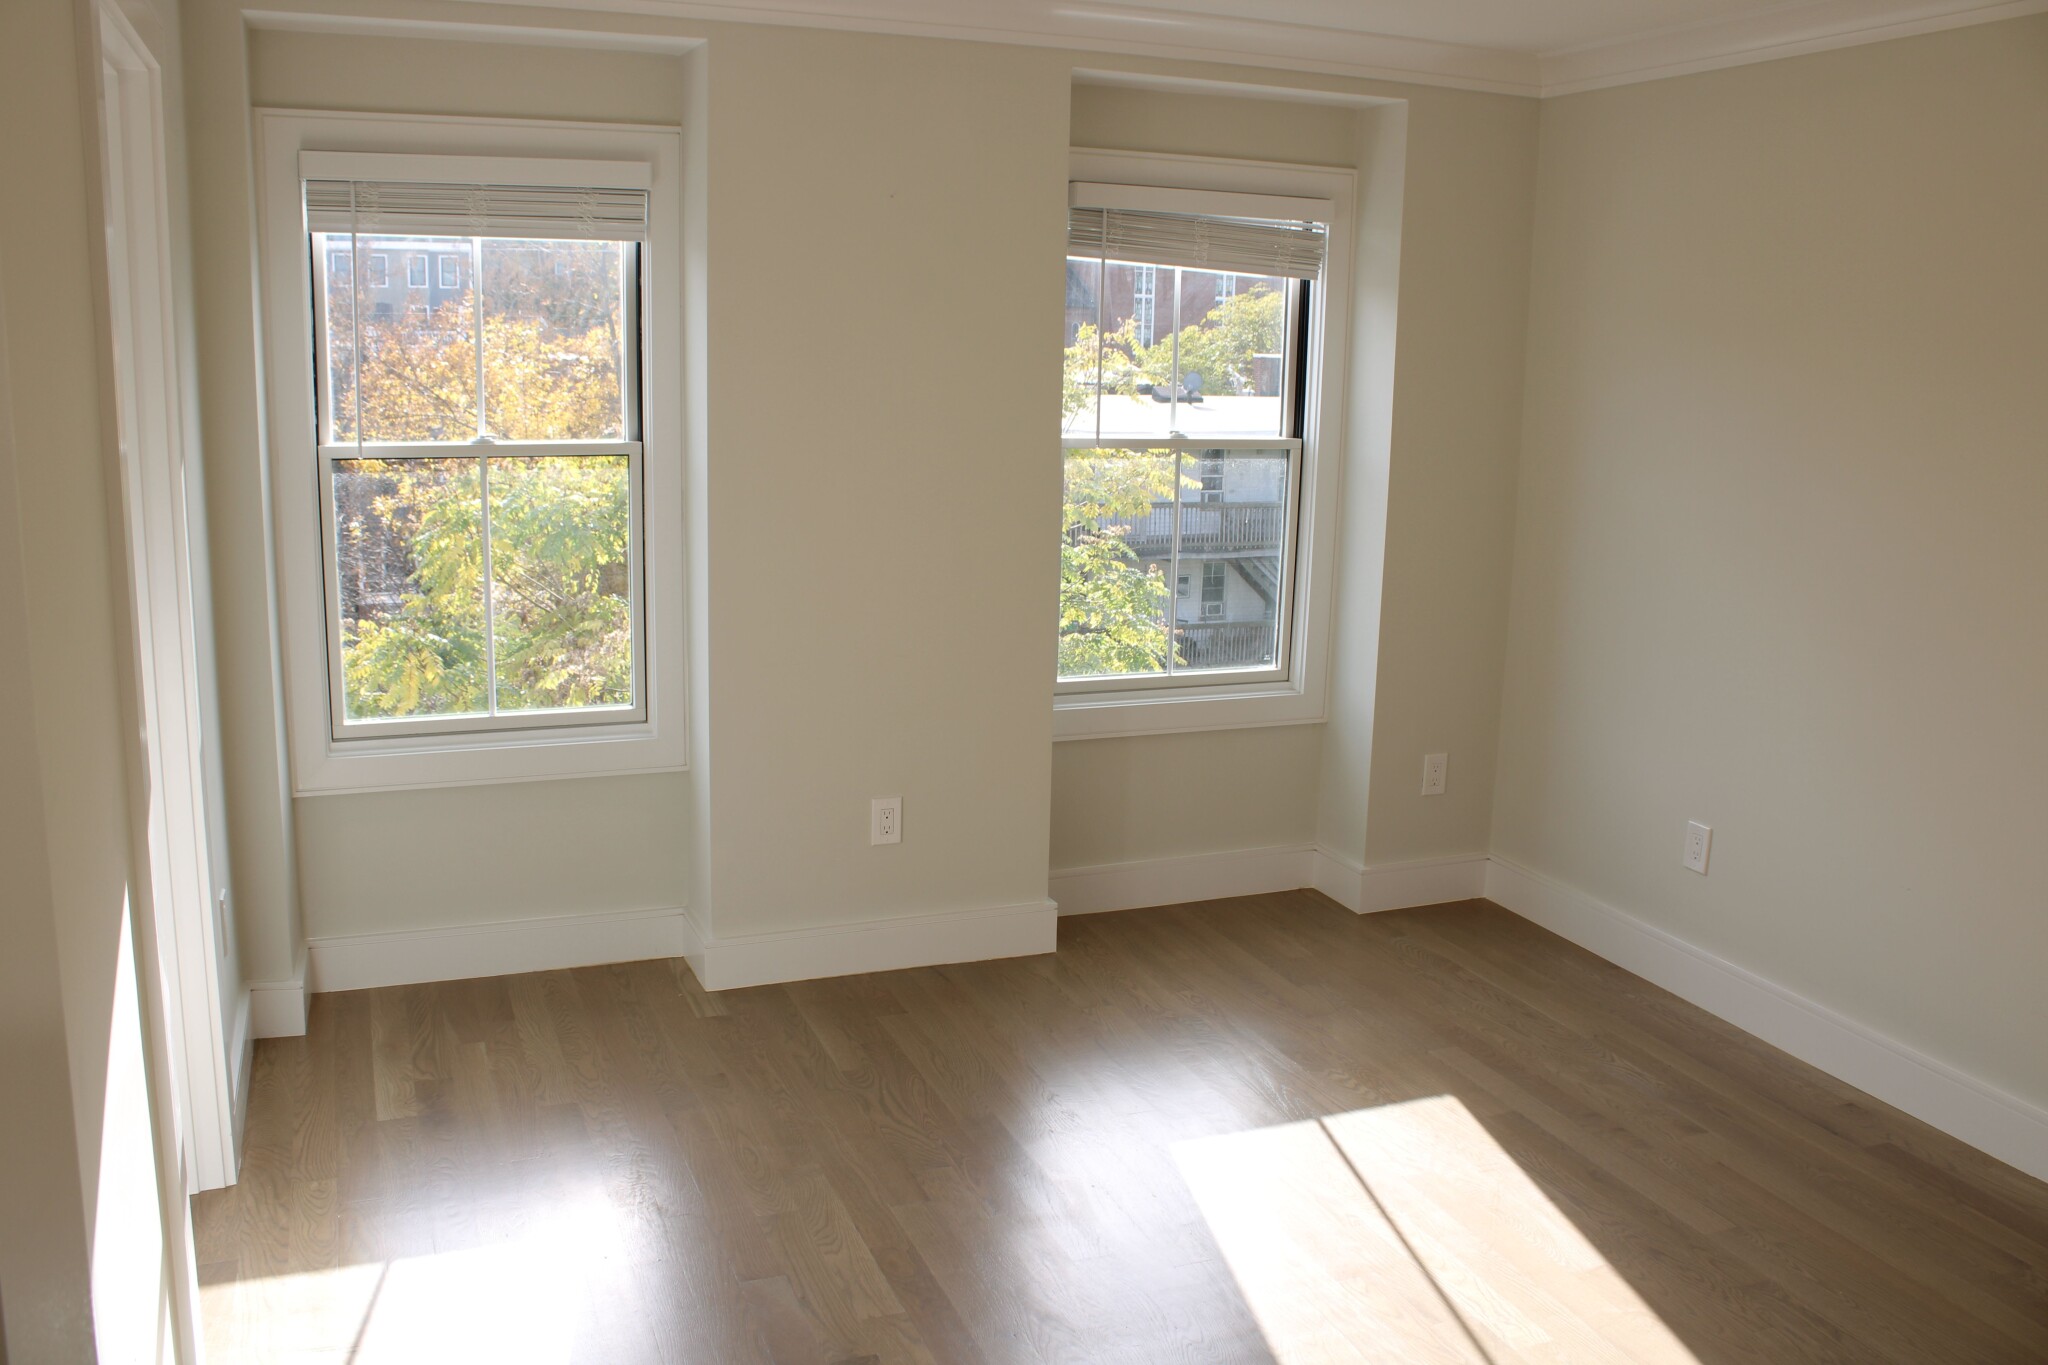 Photos of apartment on Maverick St.,Boston MA 02128